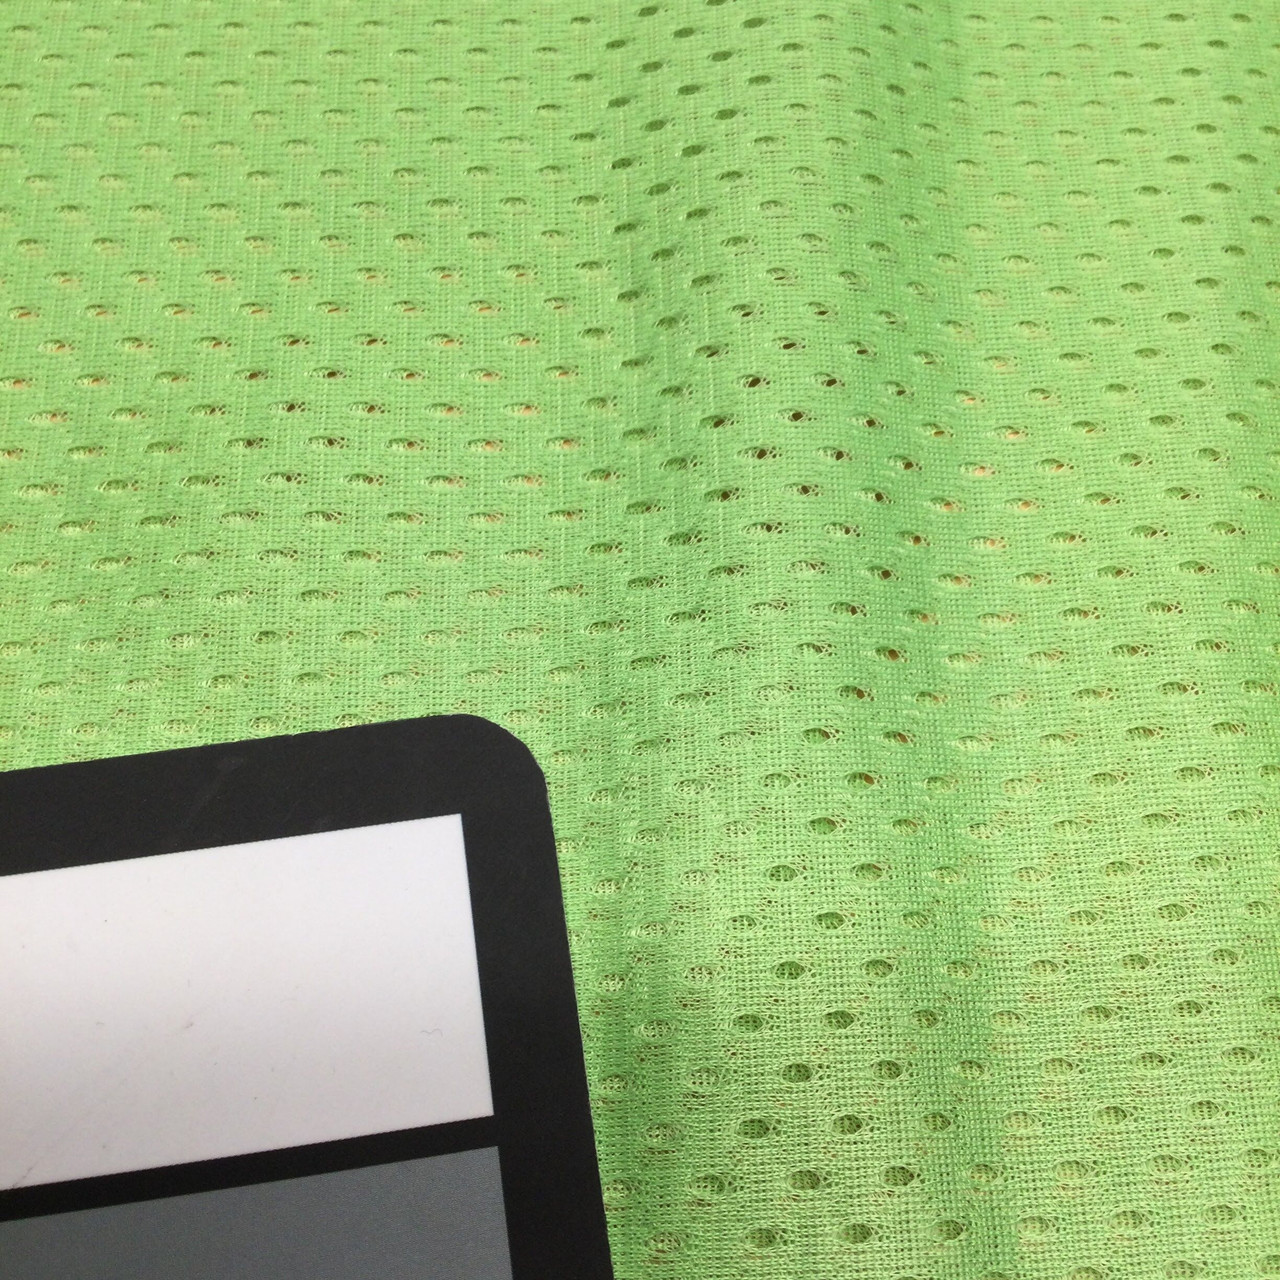 Green Mesh Athletic Fabric Sports Stretch Breathable Polyester Fabric for  Sportswear Activewear Swimwear Dancewear 1 Yard